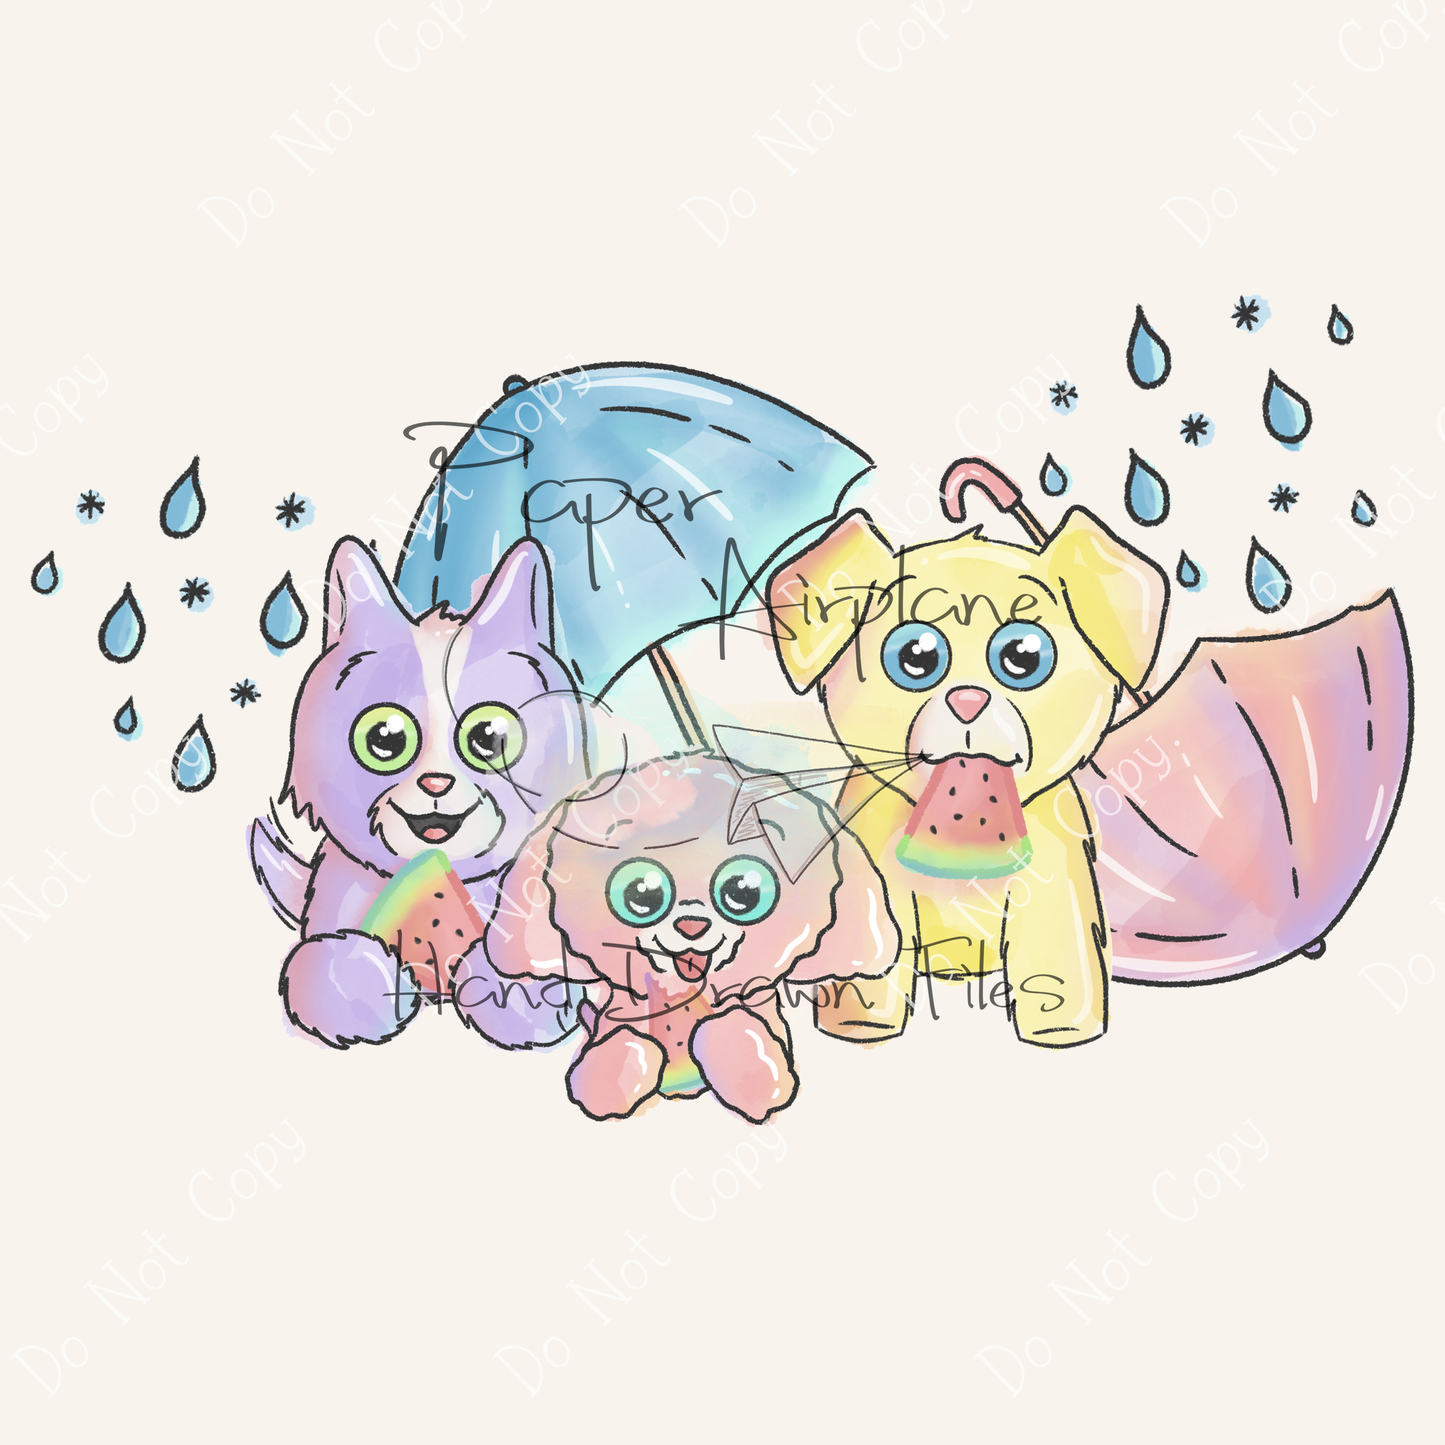 Rainy Watermelon Pups (Cotton Candy)